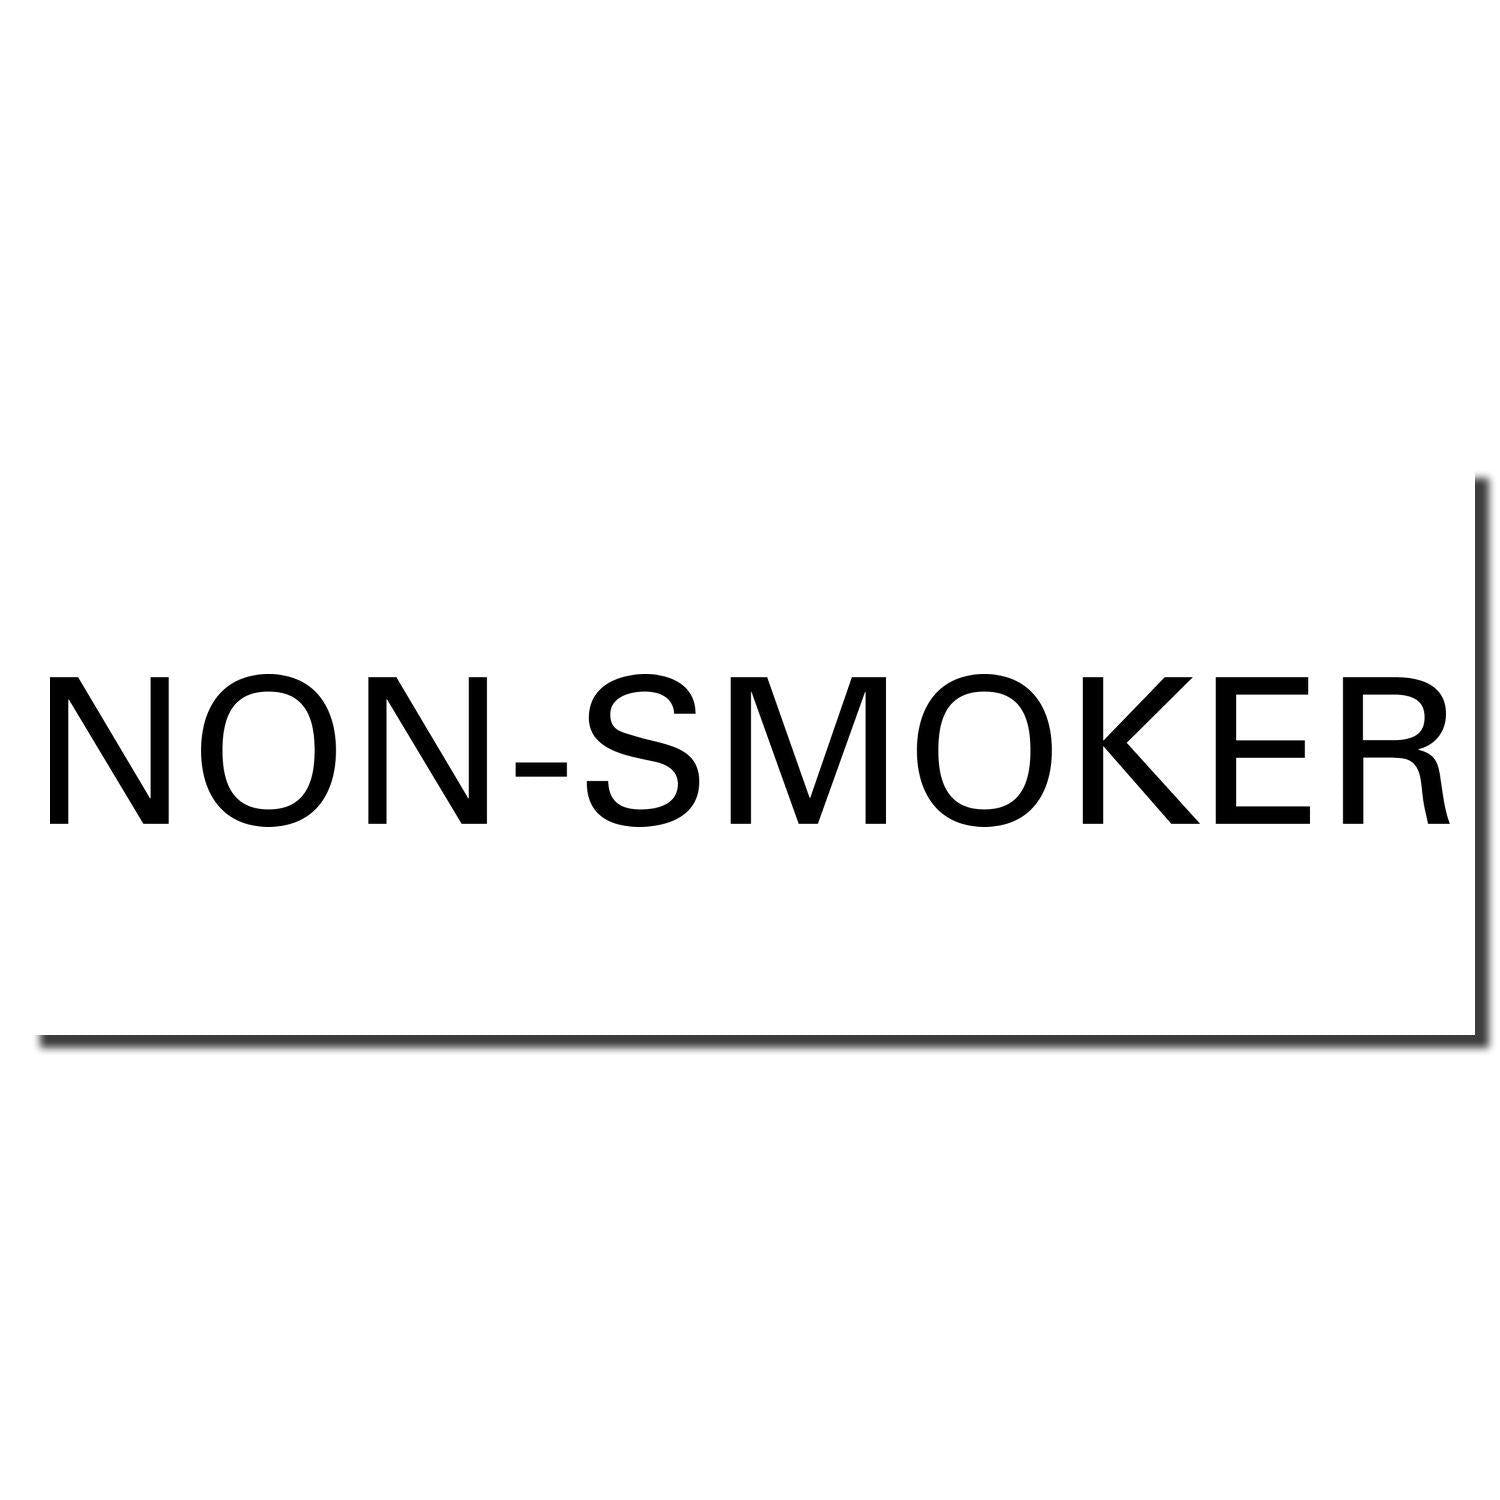 Enlarged Imprint Large Non-Smoker Rubber Stamp Sample